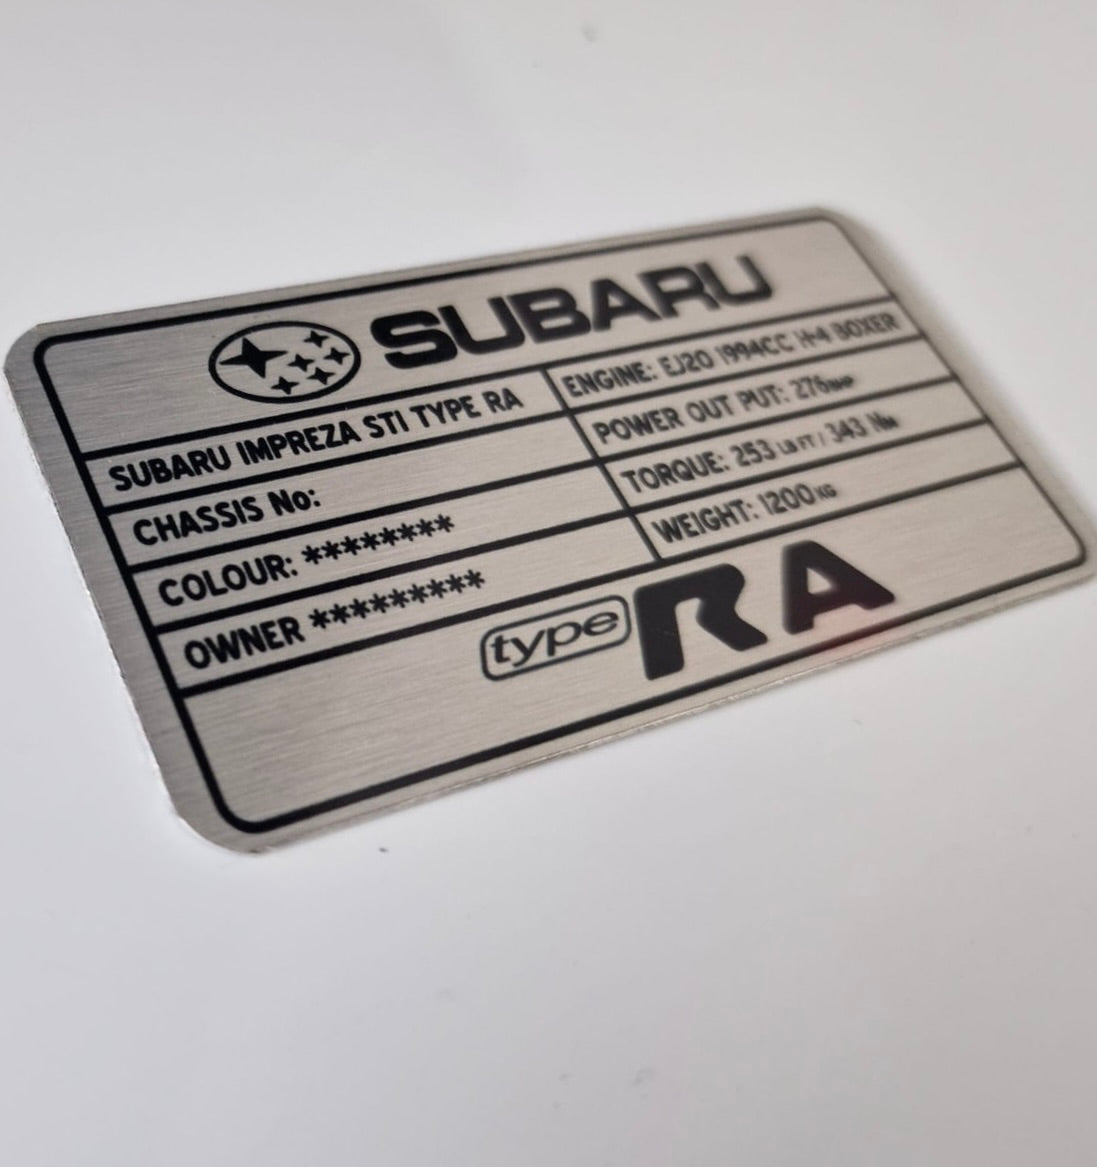 Subaru Impreza Type RA Customised Plaque (for under bonnet).